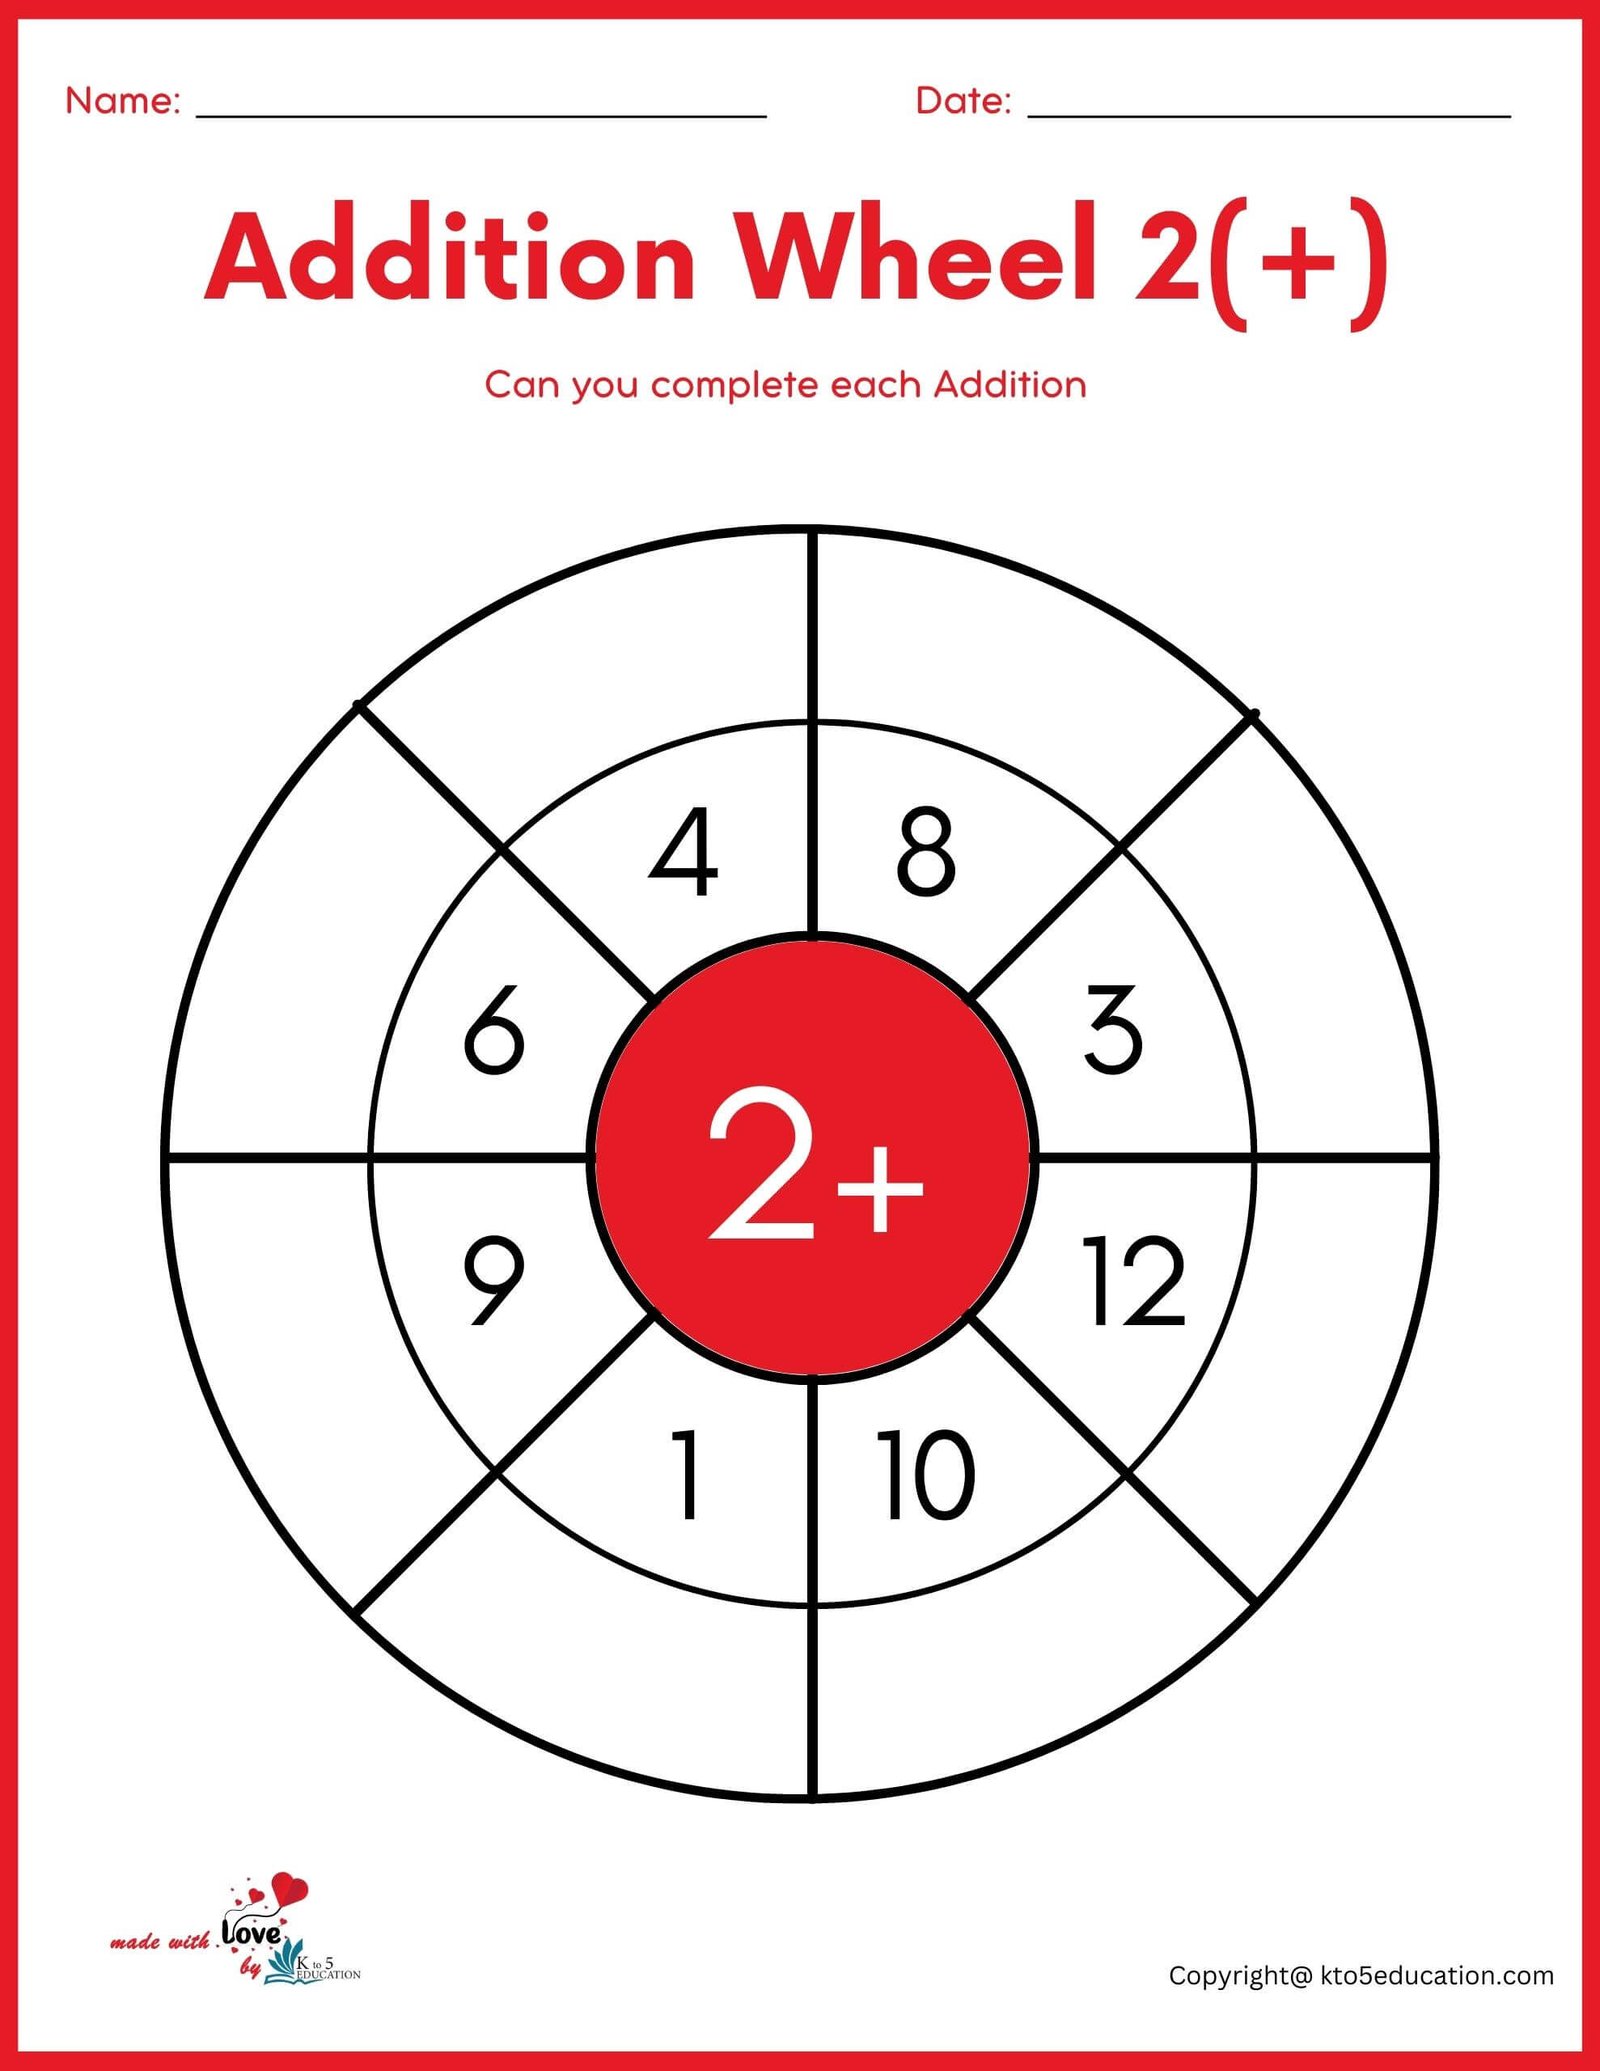 Addition Wheel Worksheet